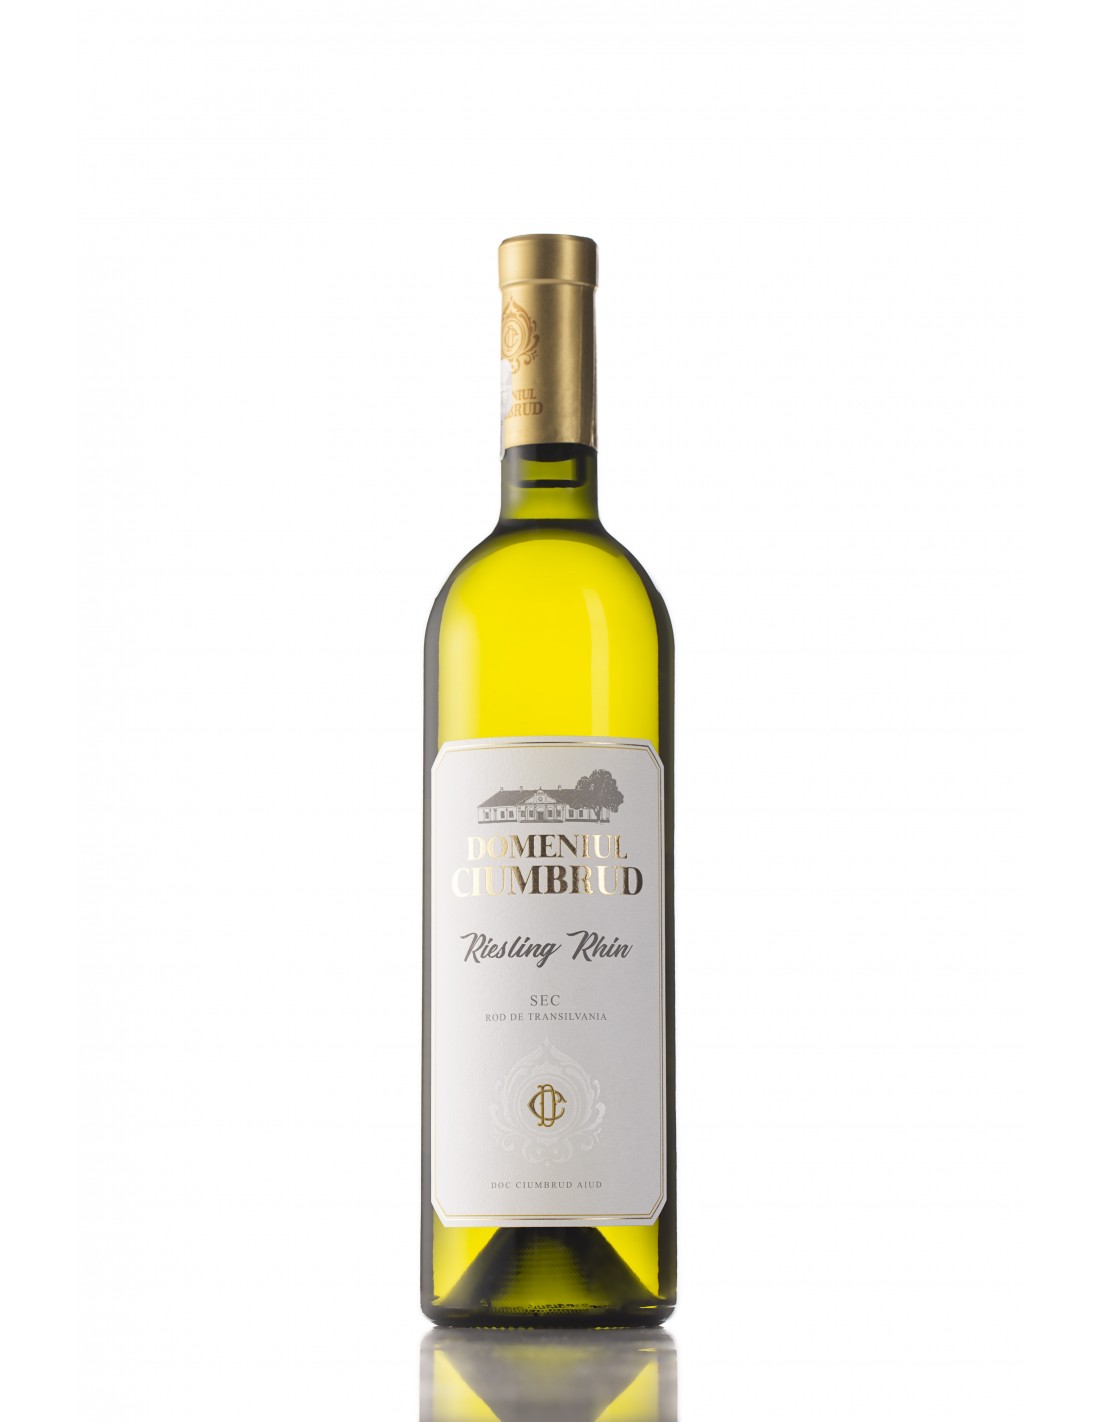 Vin alb sec, Riesling Rhein , Domeniul Ciumbrud, 12.2% alc., 0.75L, Romania